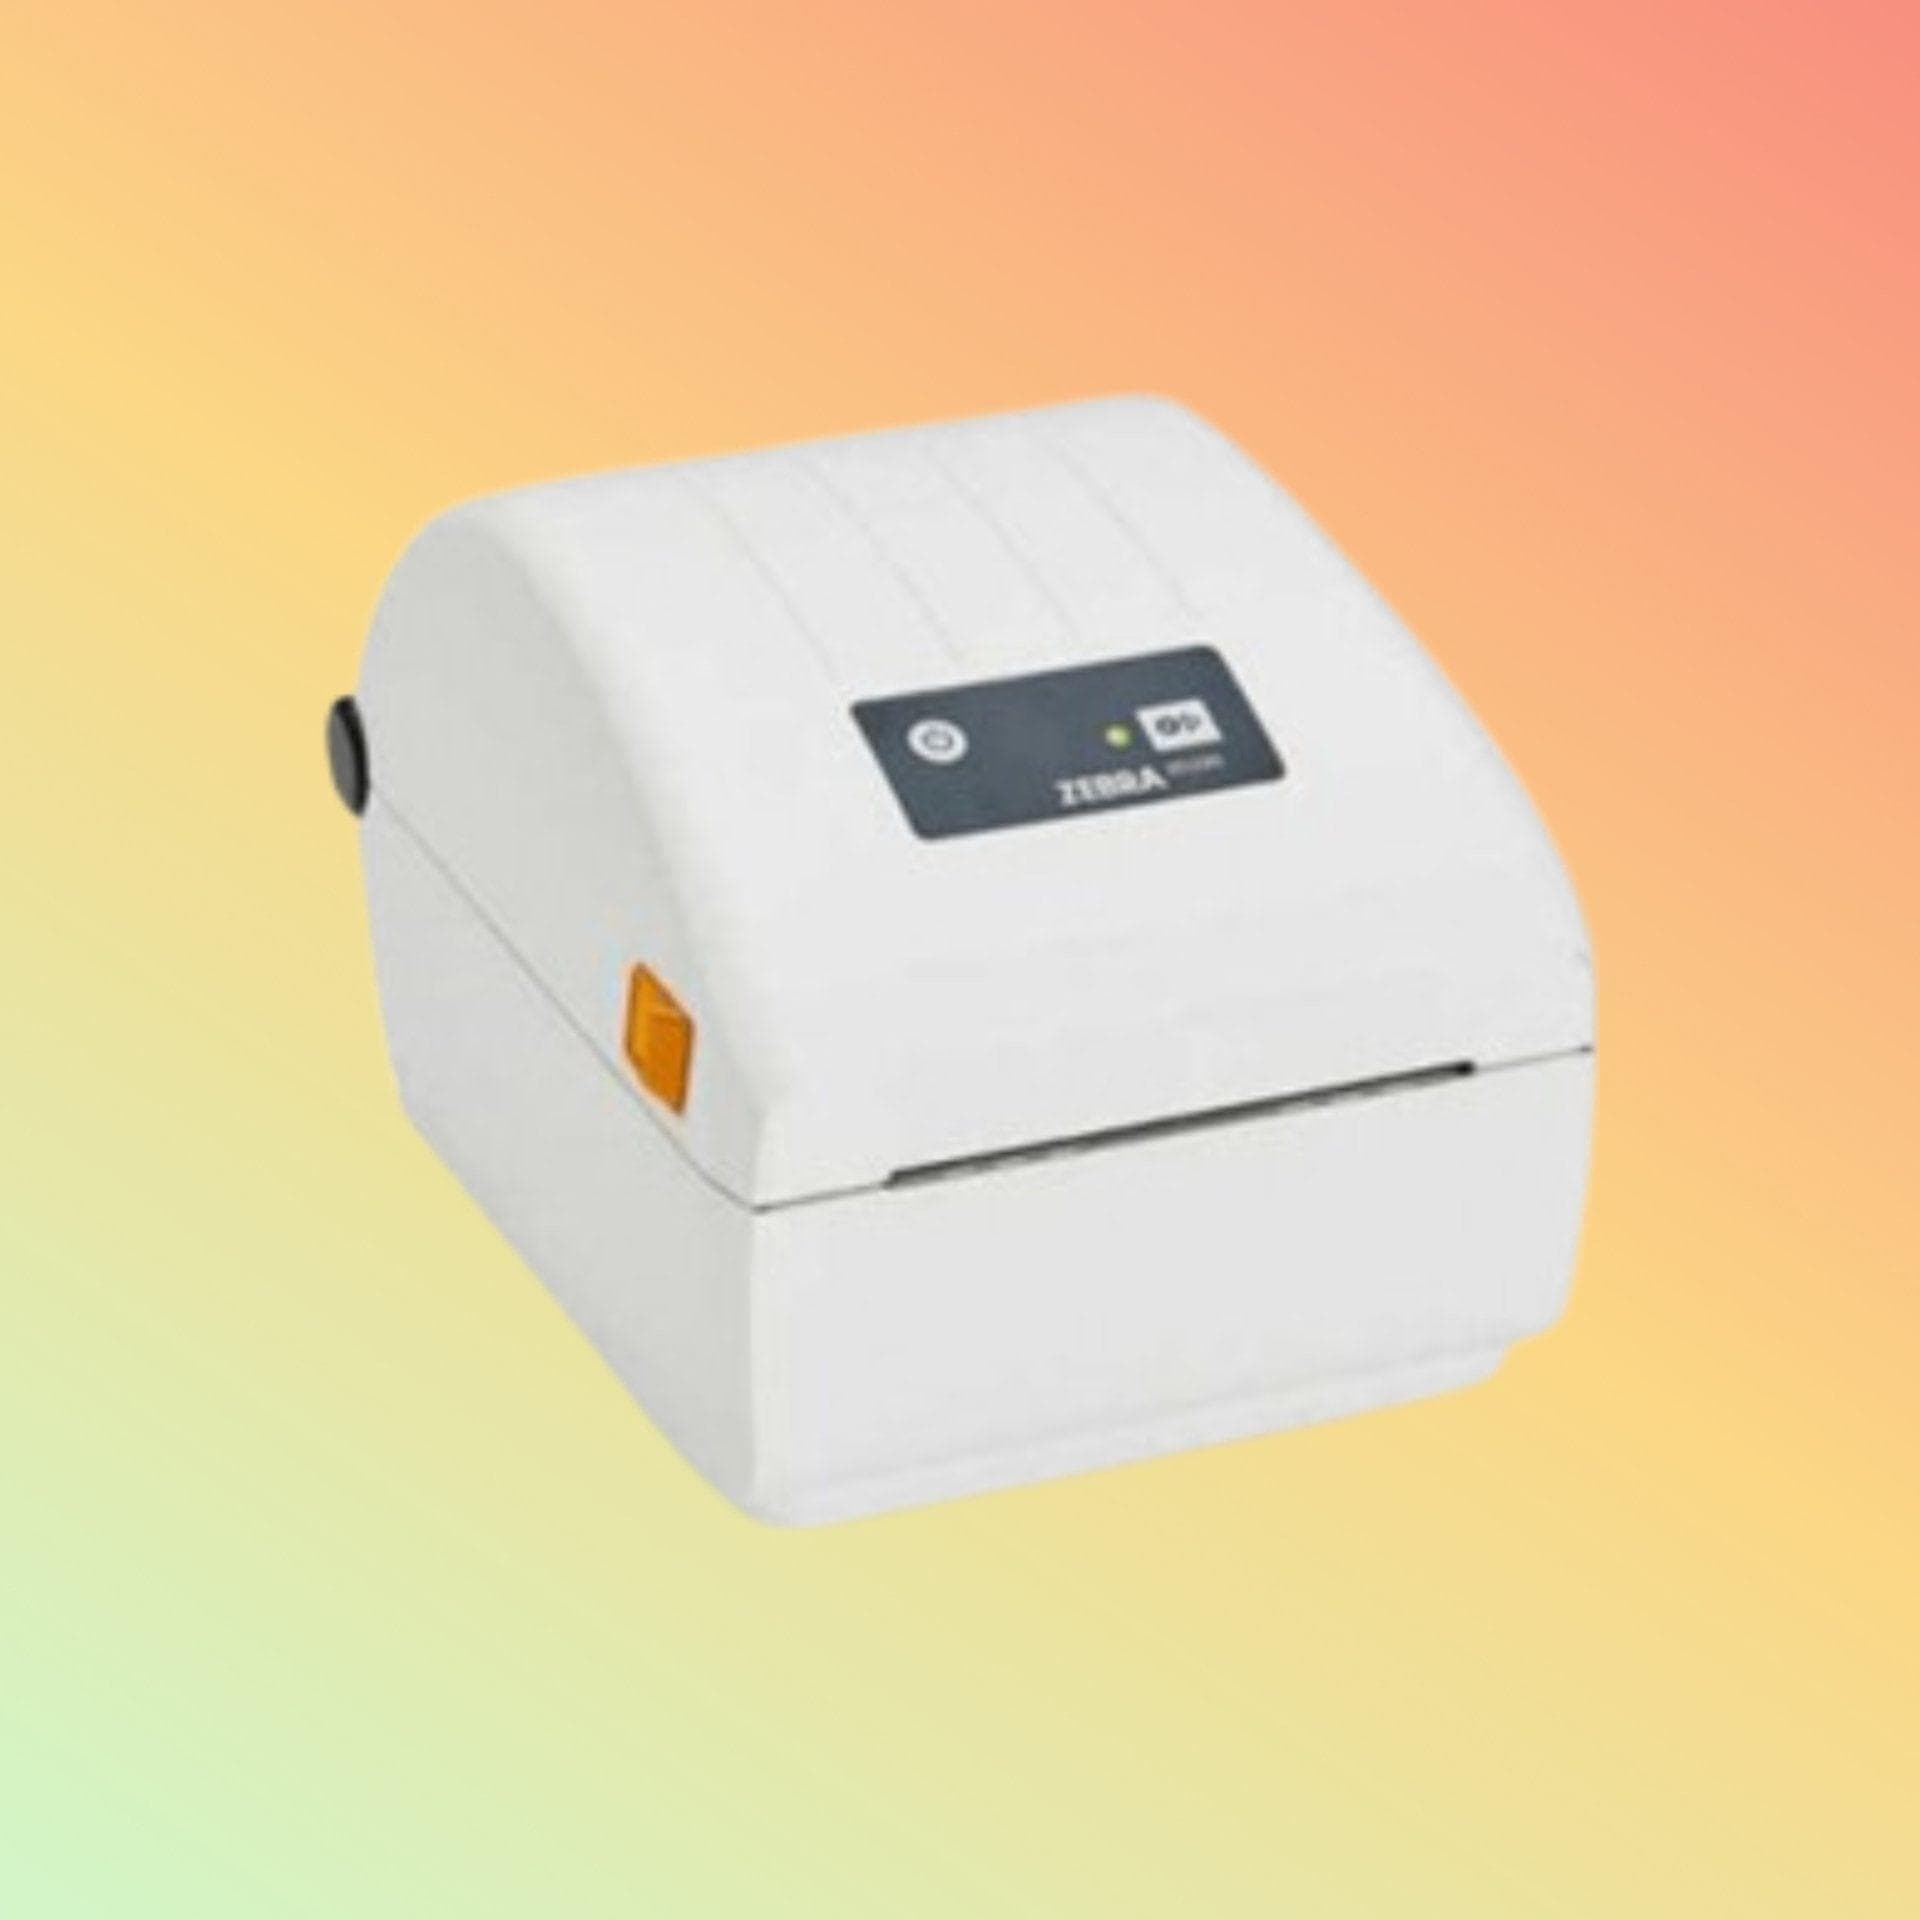 Barcode Printer - Zebra ZD230 - Neotech